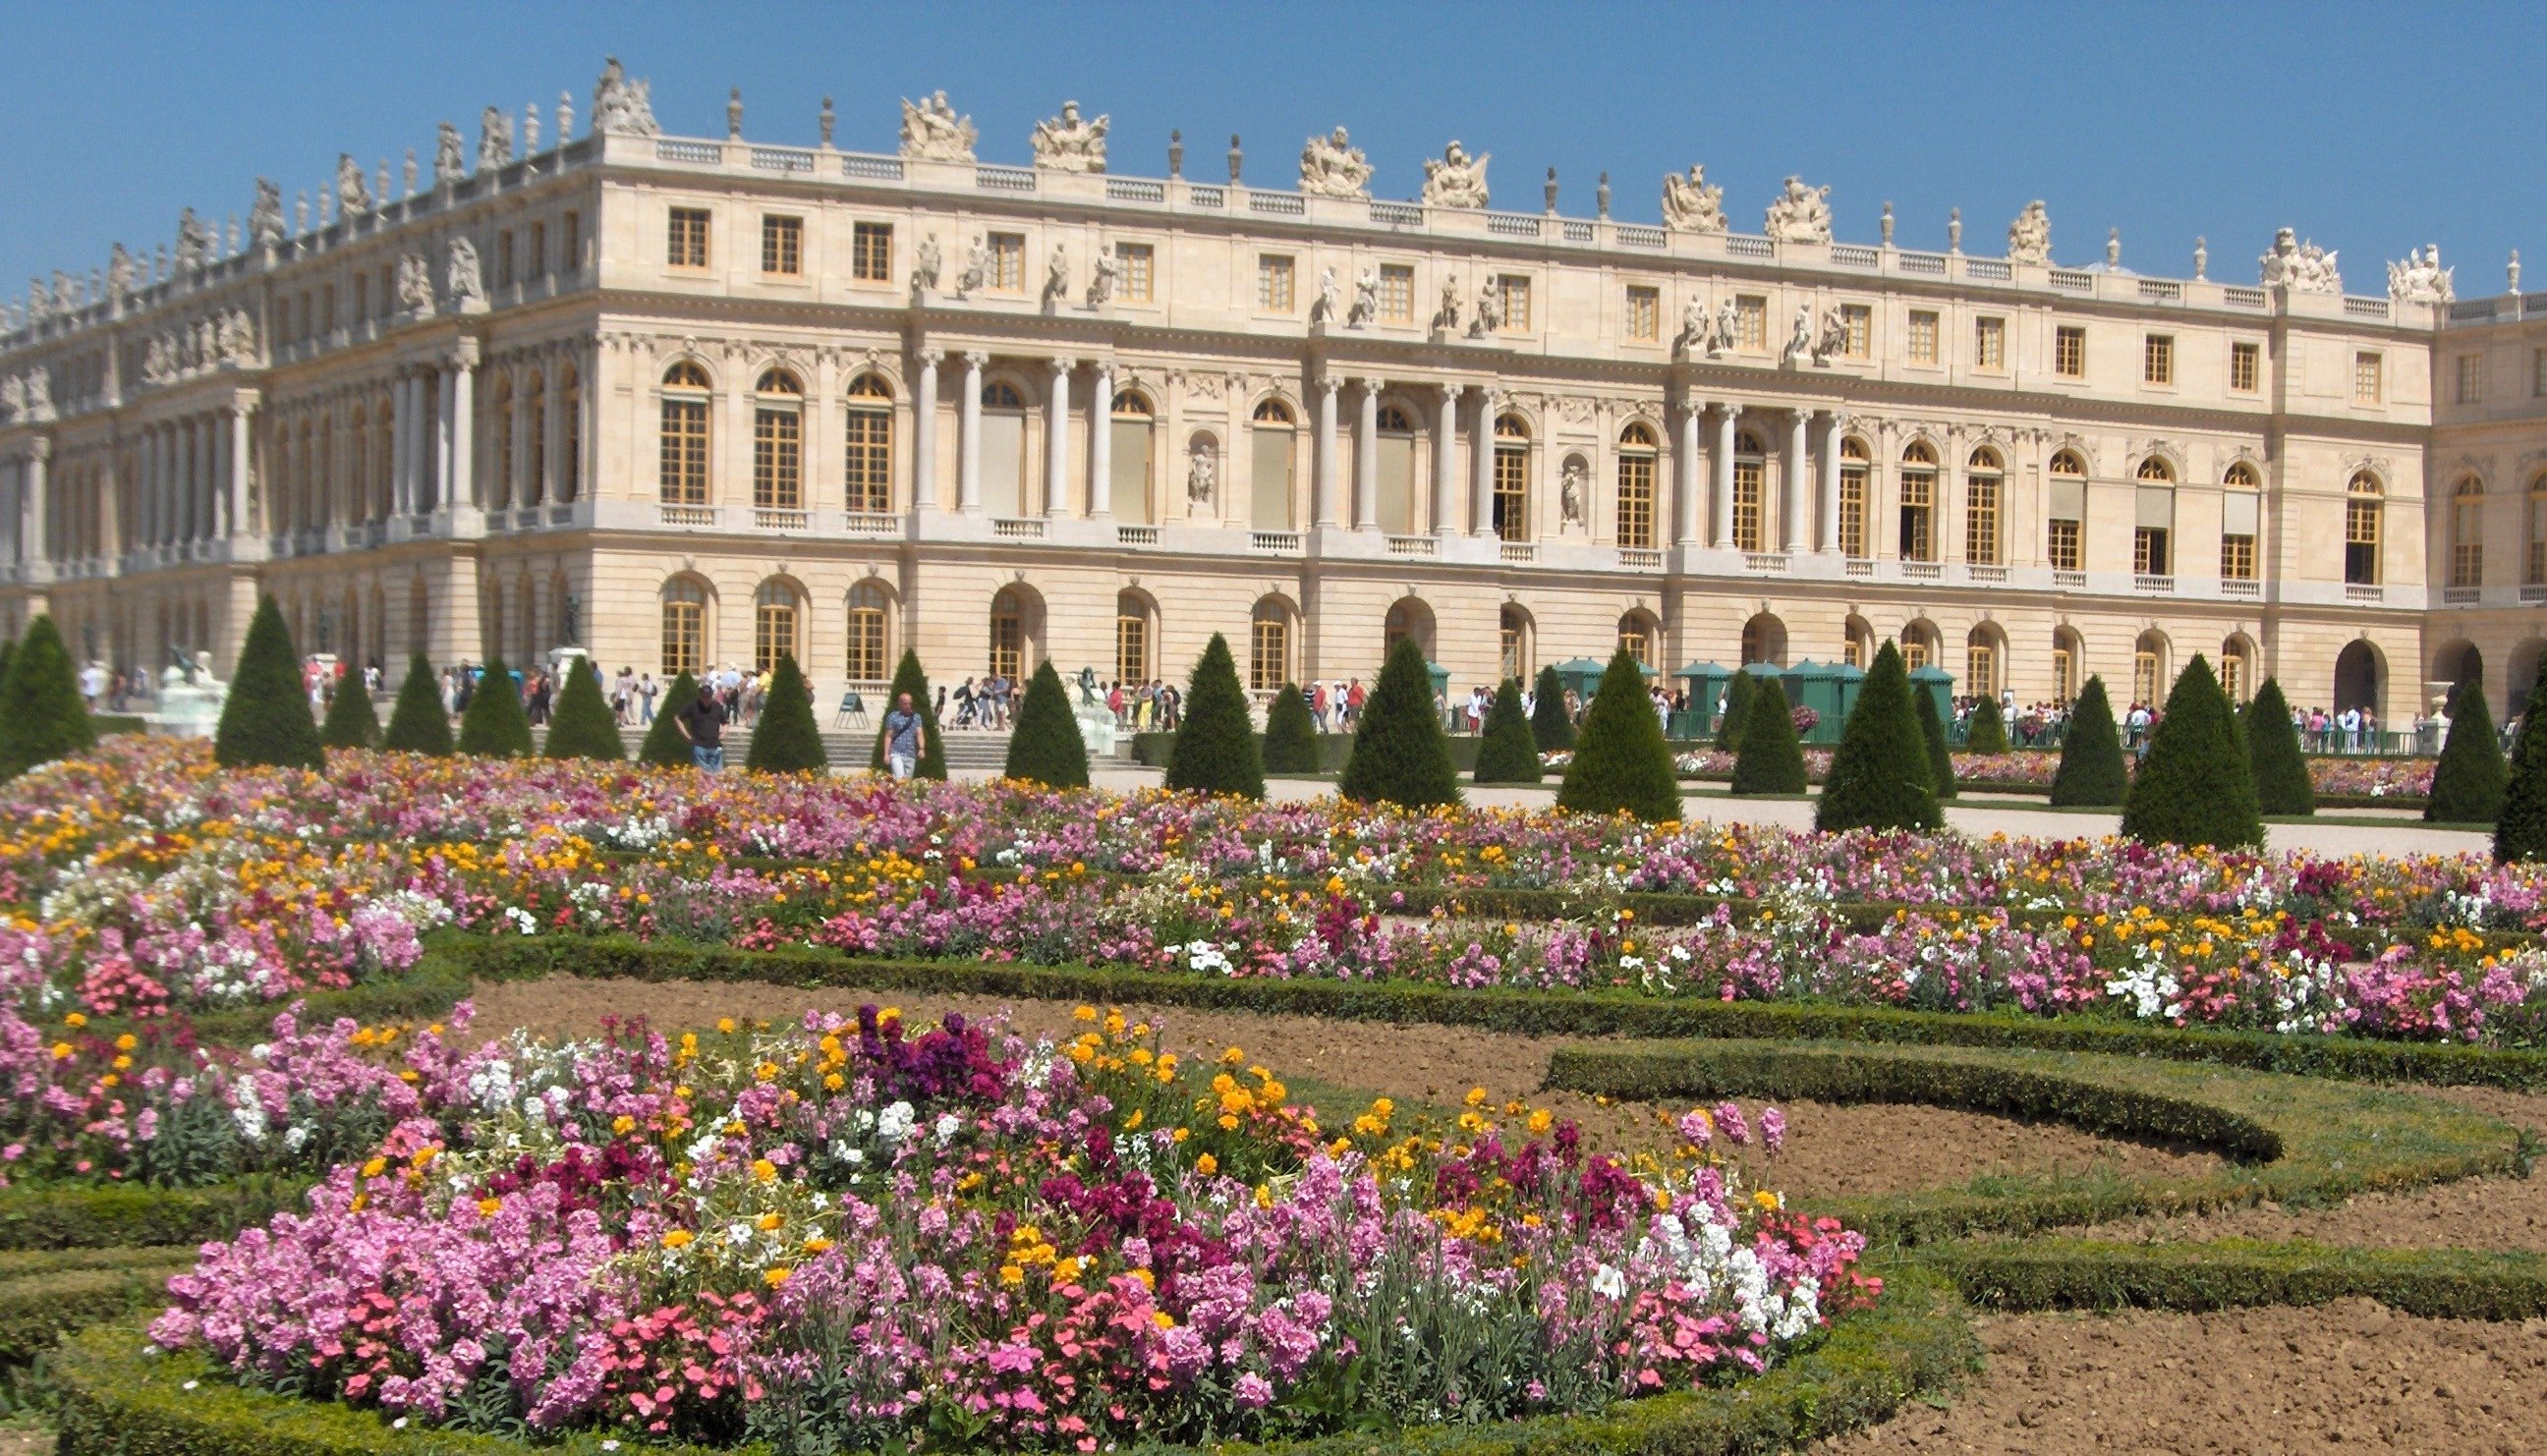 Chateau versailles. Версальский дворец дворцы Франции. Дворец Версаль версальный парк. Замок Версаль (Chateau de Versailles). Мраморный двор Версальского дворца.